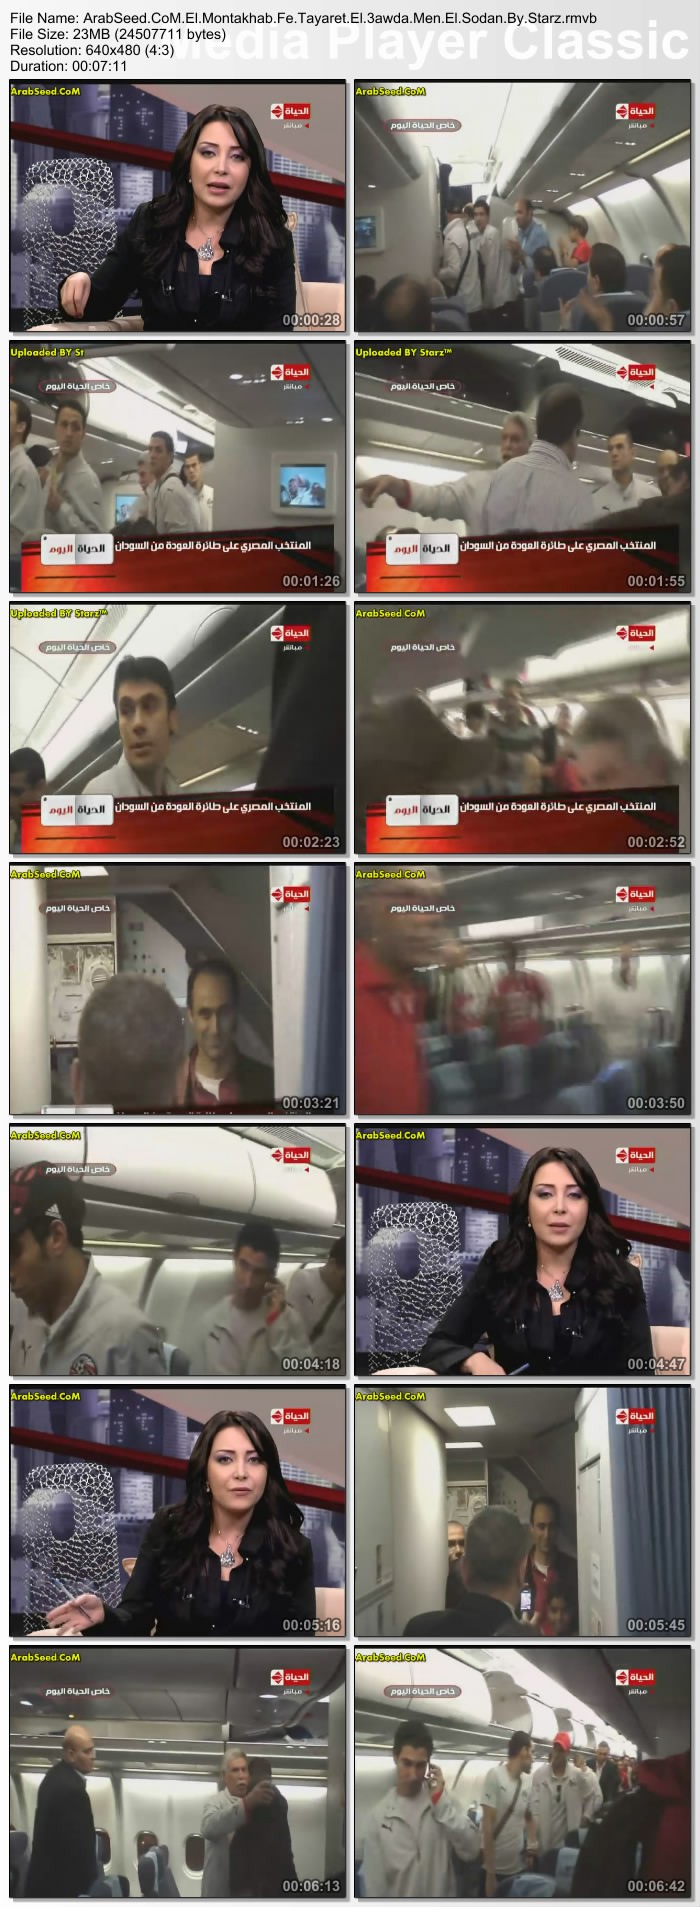 c15 تحميل فيديو داخل طائرة عودة المنتخب المصري من السودان